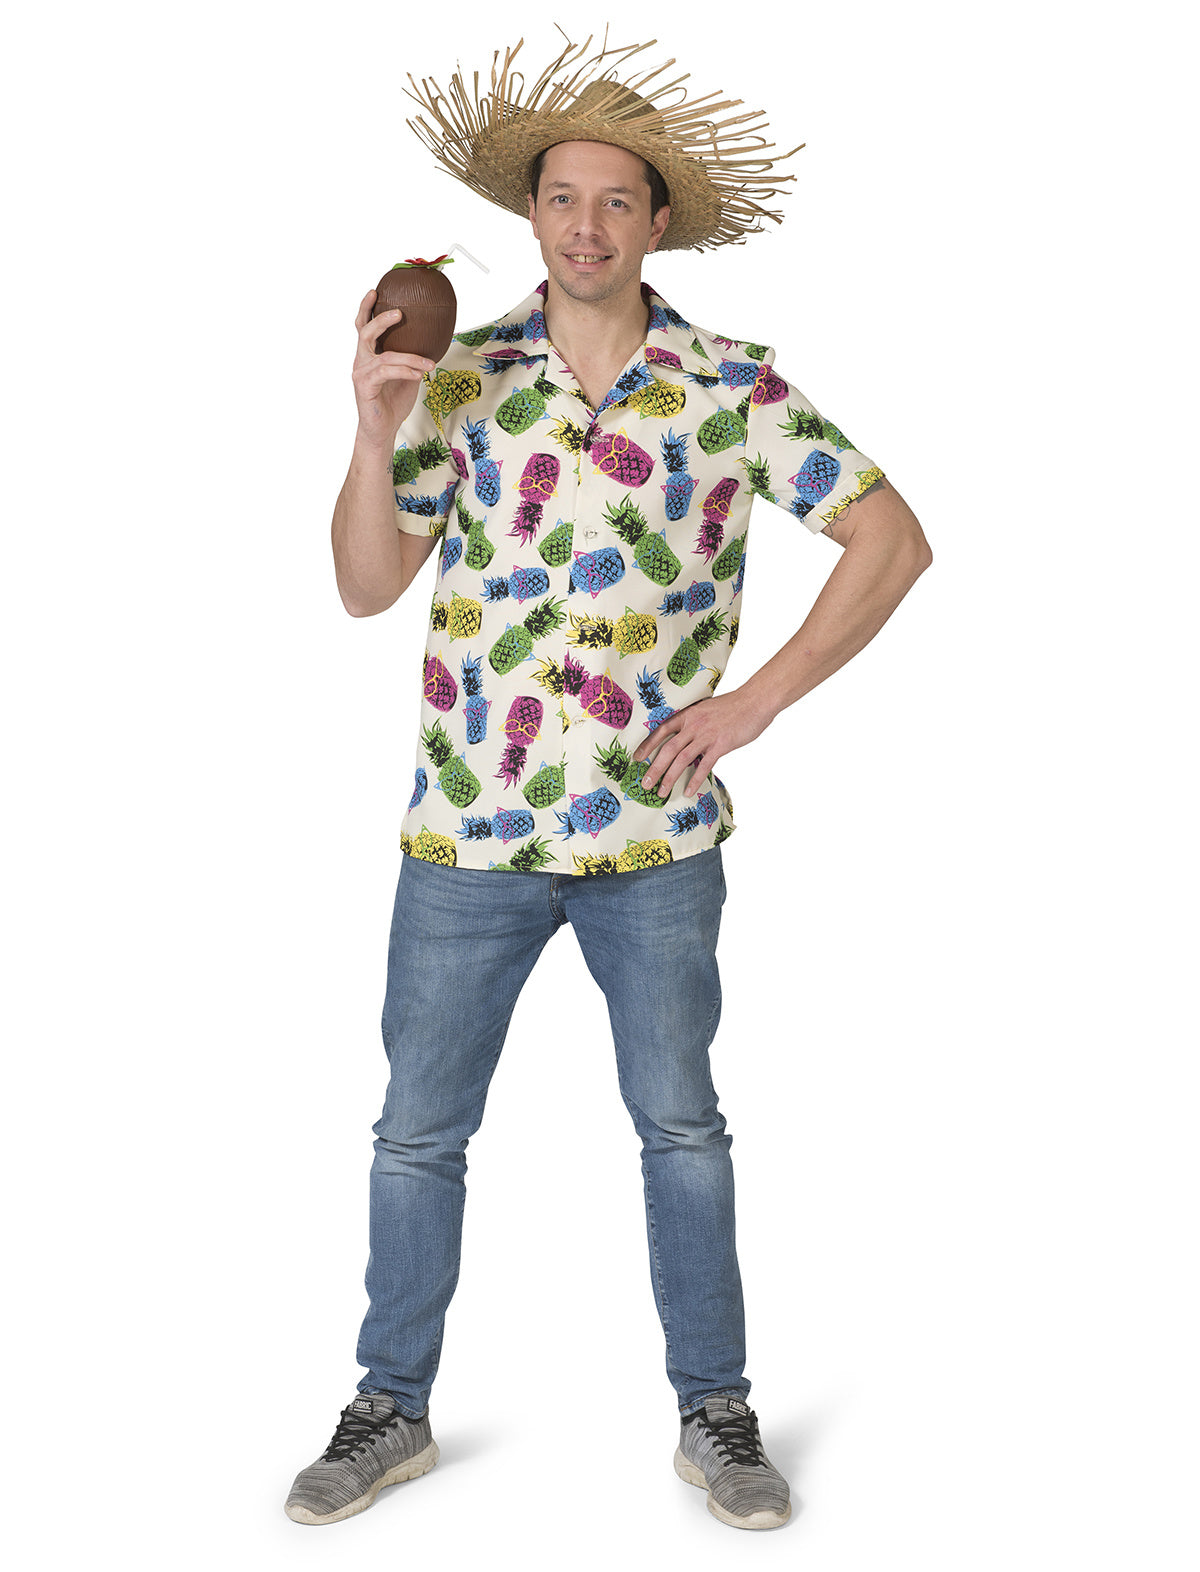 Funny Fashion - Natuur Groente & Fruit Kostuum - Tropisch Samba Costa Rica Ananas Shirt Man - wit / beige,multicolor - Maat 48-50 - Carnavalskleding - Verkleedkleding